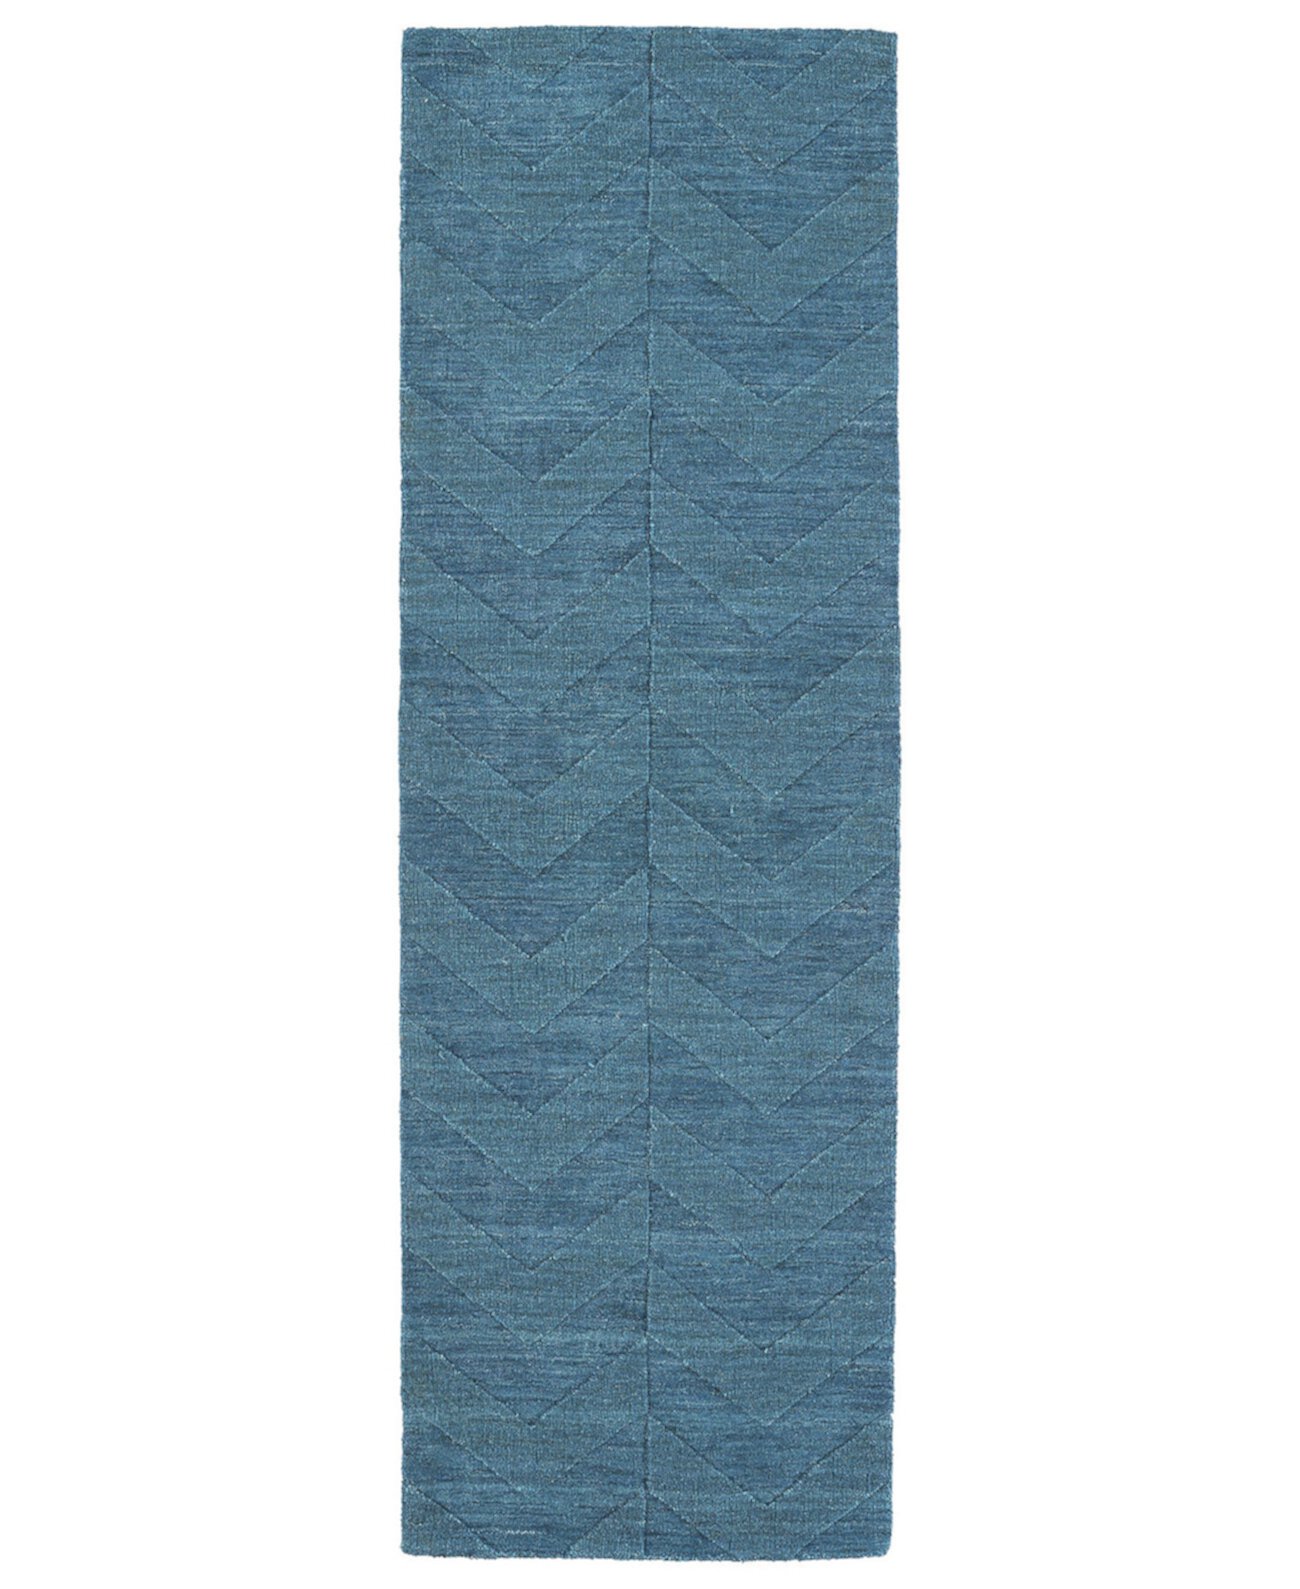 Imprints Modern IPM05-78 Turquoise 2'6" x 8' Runner Rug Kaleen